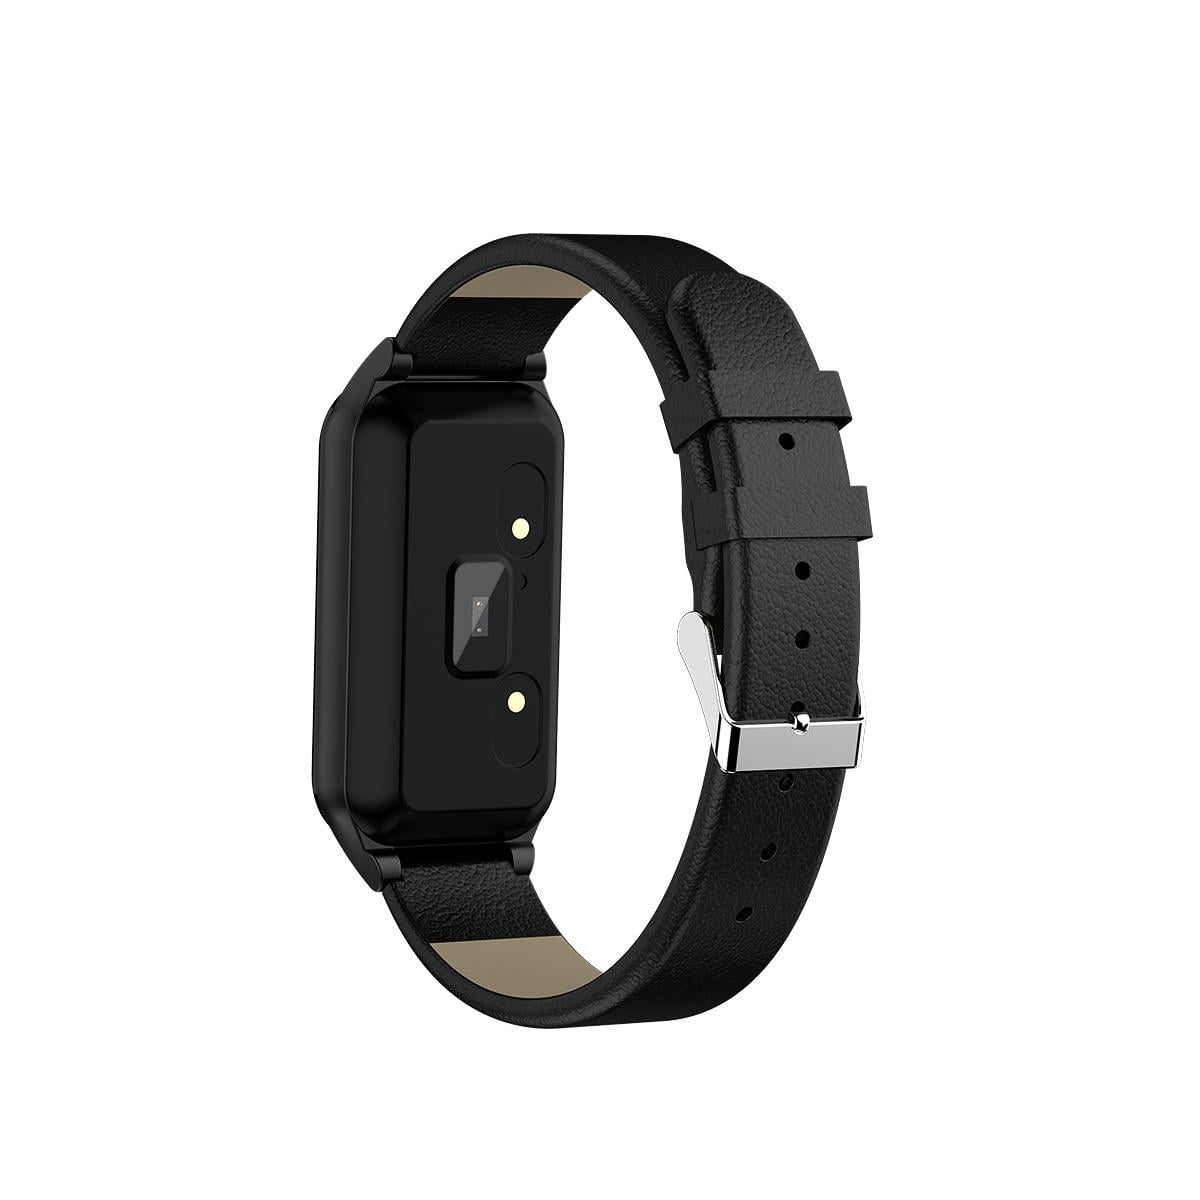 Bakeey smartwatch L818 bt5.0 intelligent noise reduction wireless earphone wristband (29)